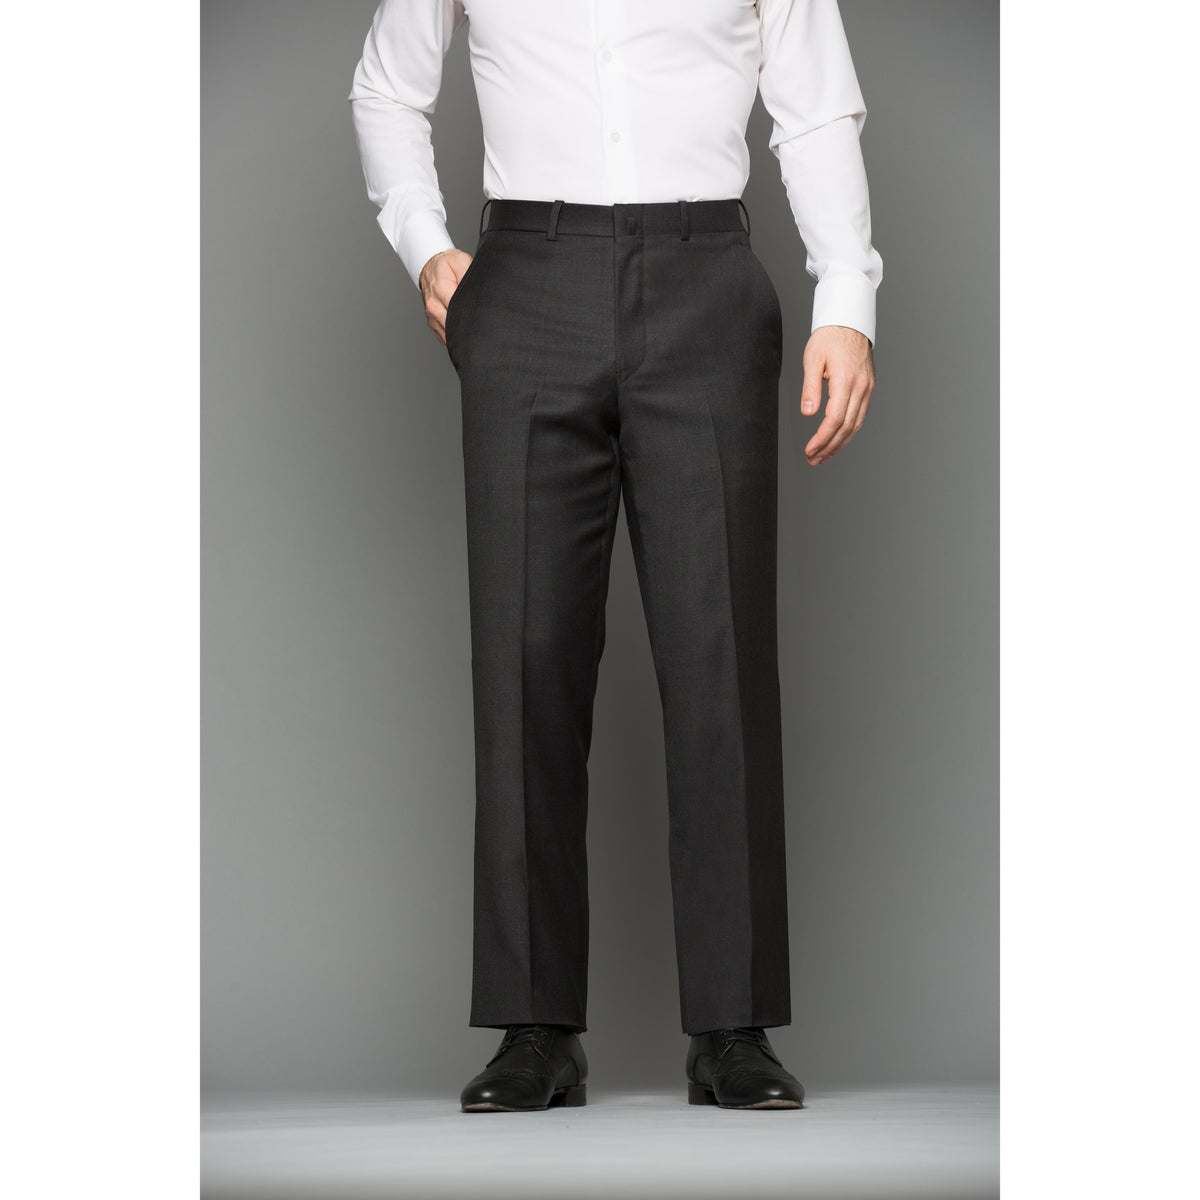 Topman suit trousers in dark grey | ASOS